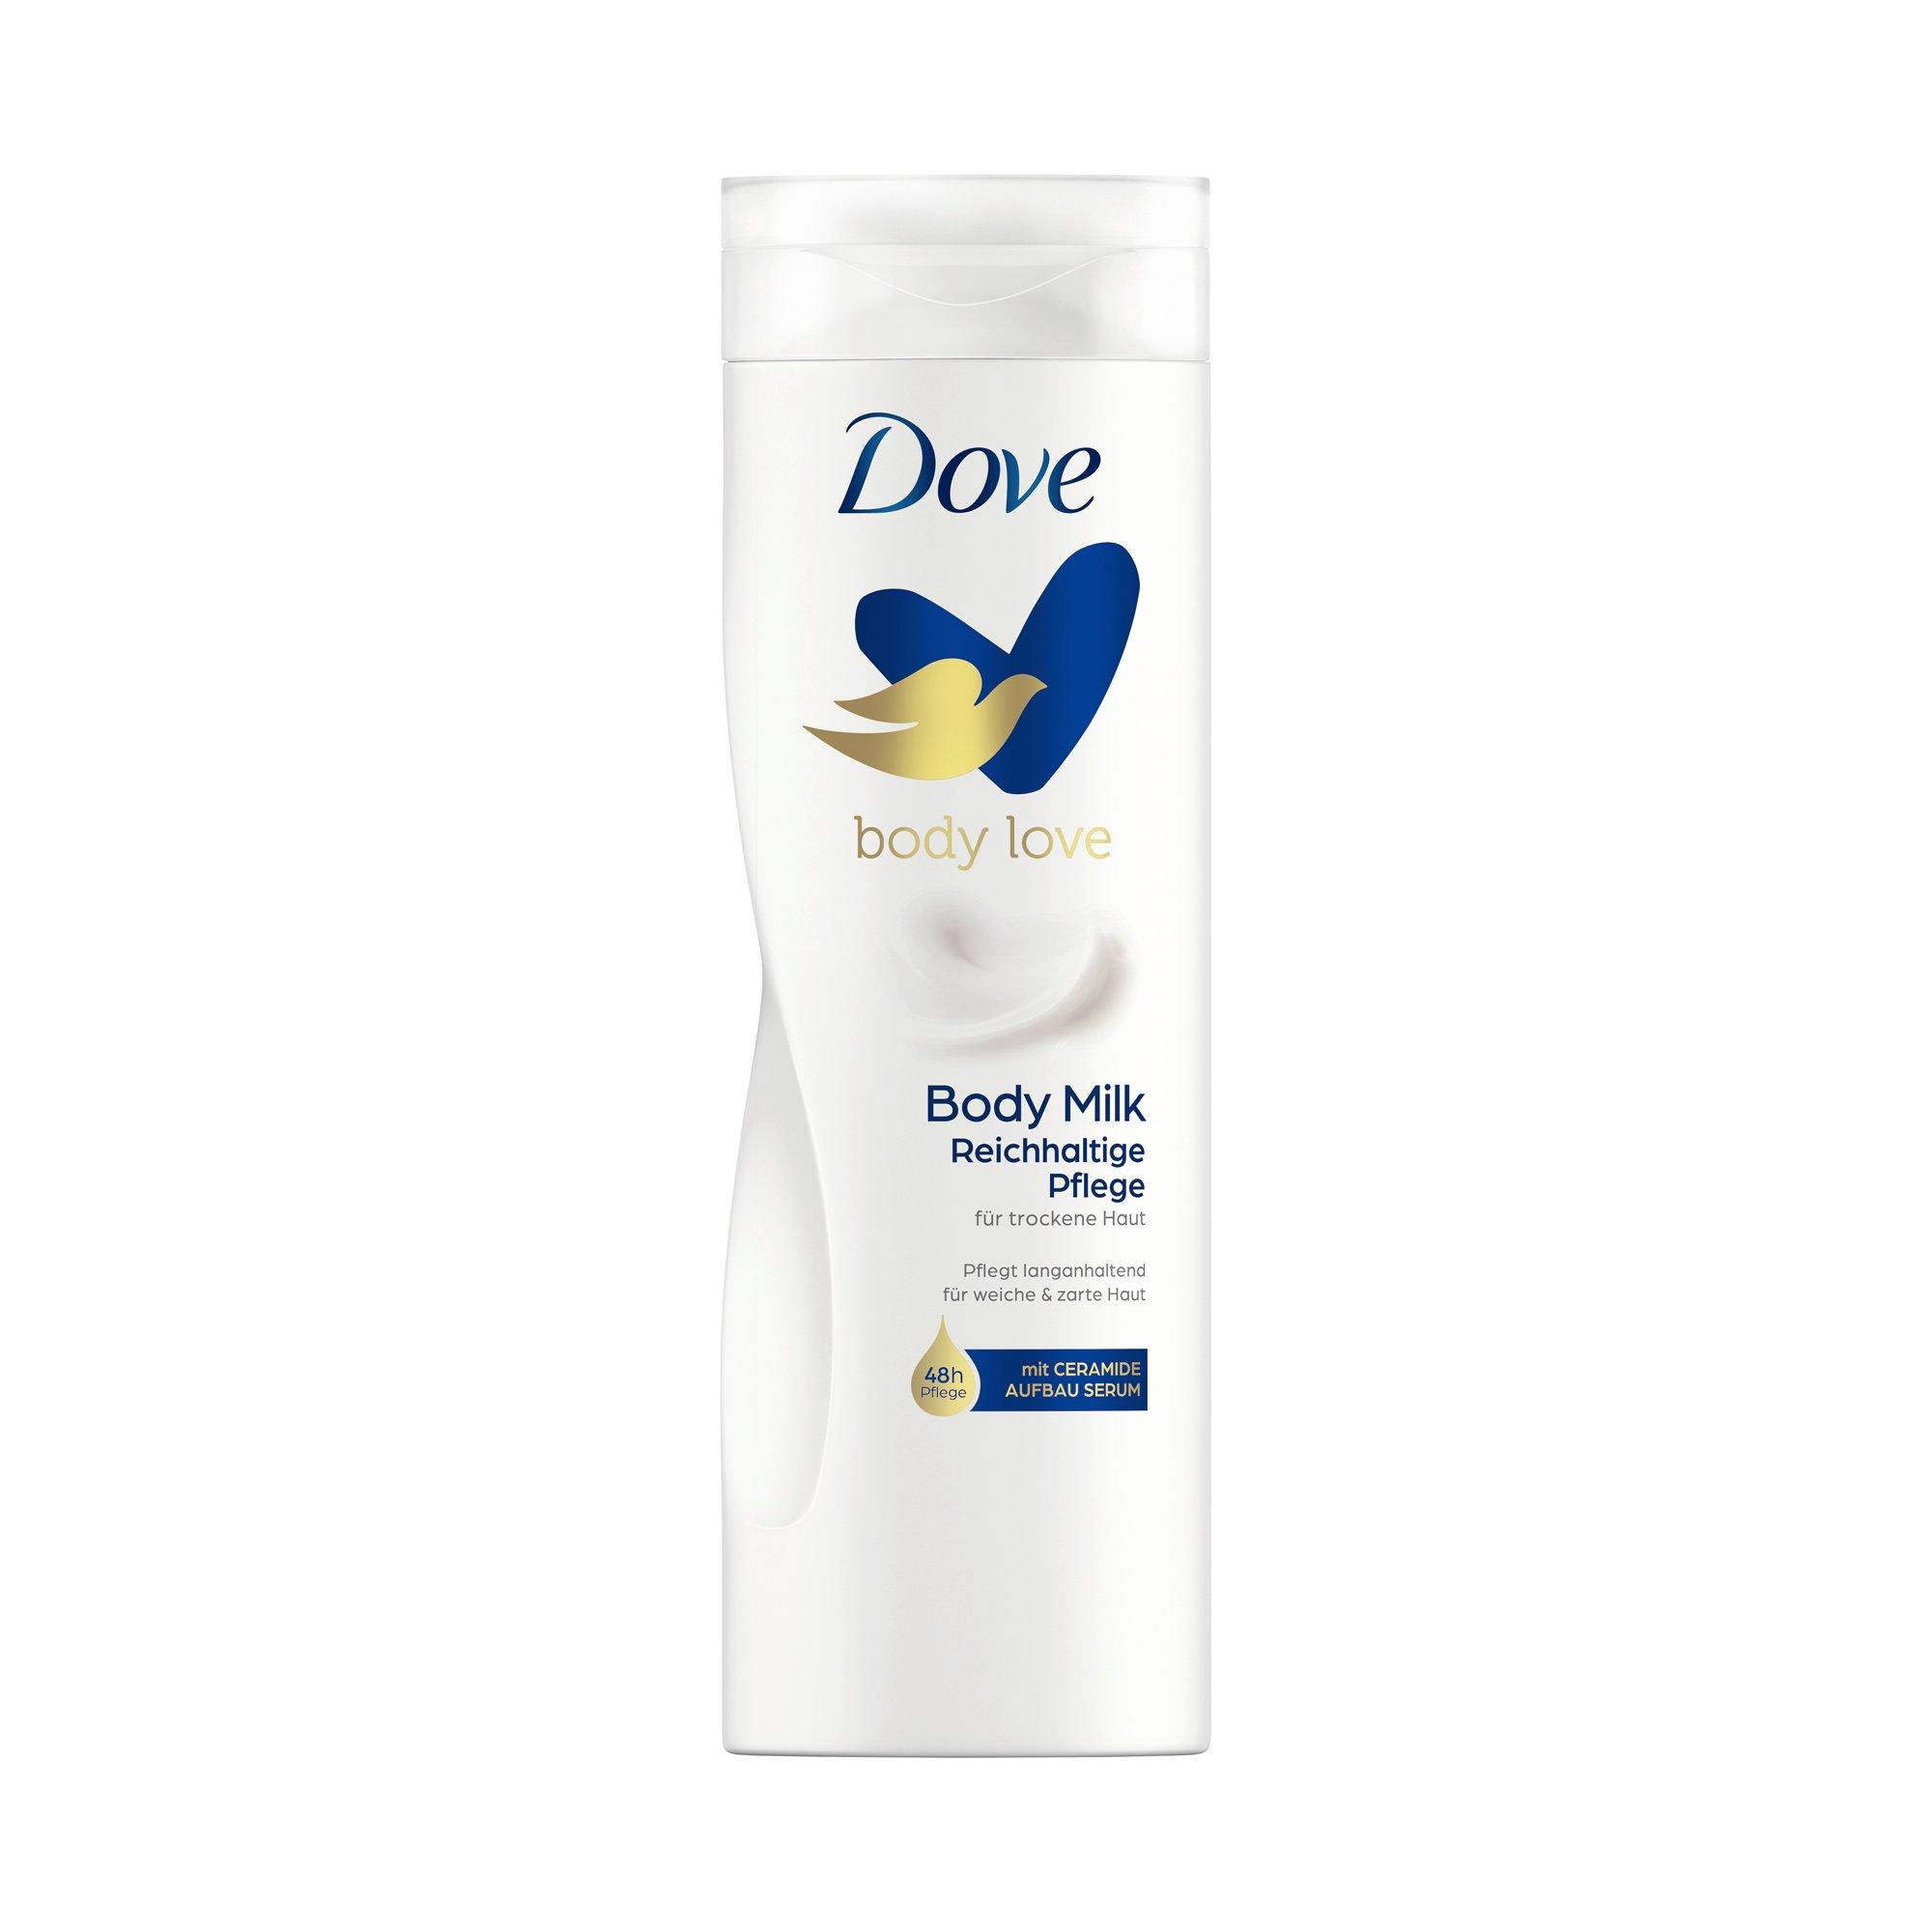 Image of Dove Body Love Body Milk Reichhaltige Pflege - 400ml